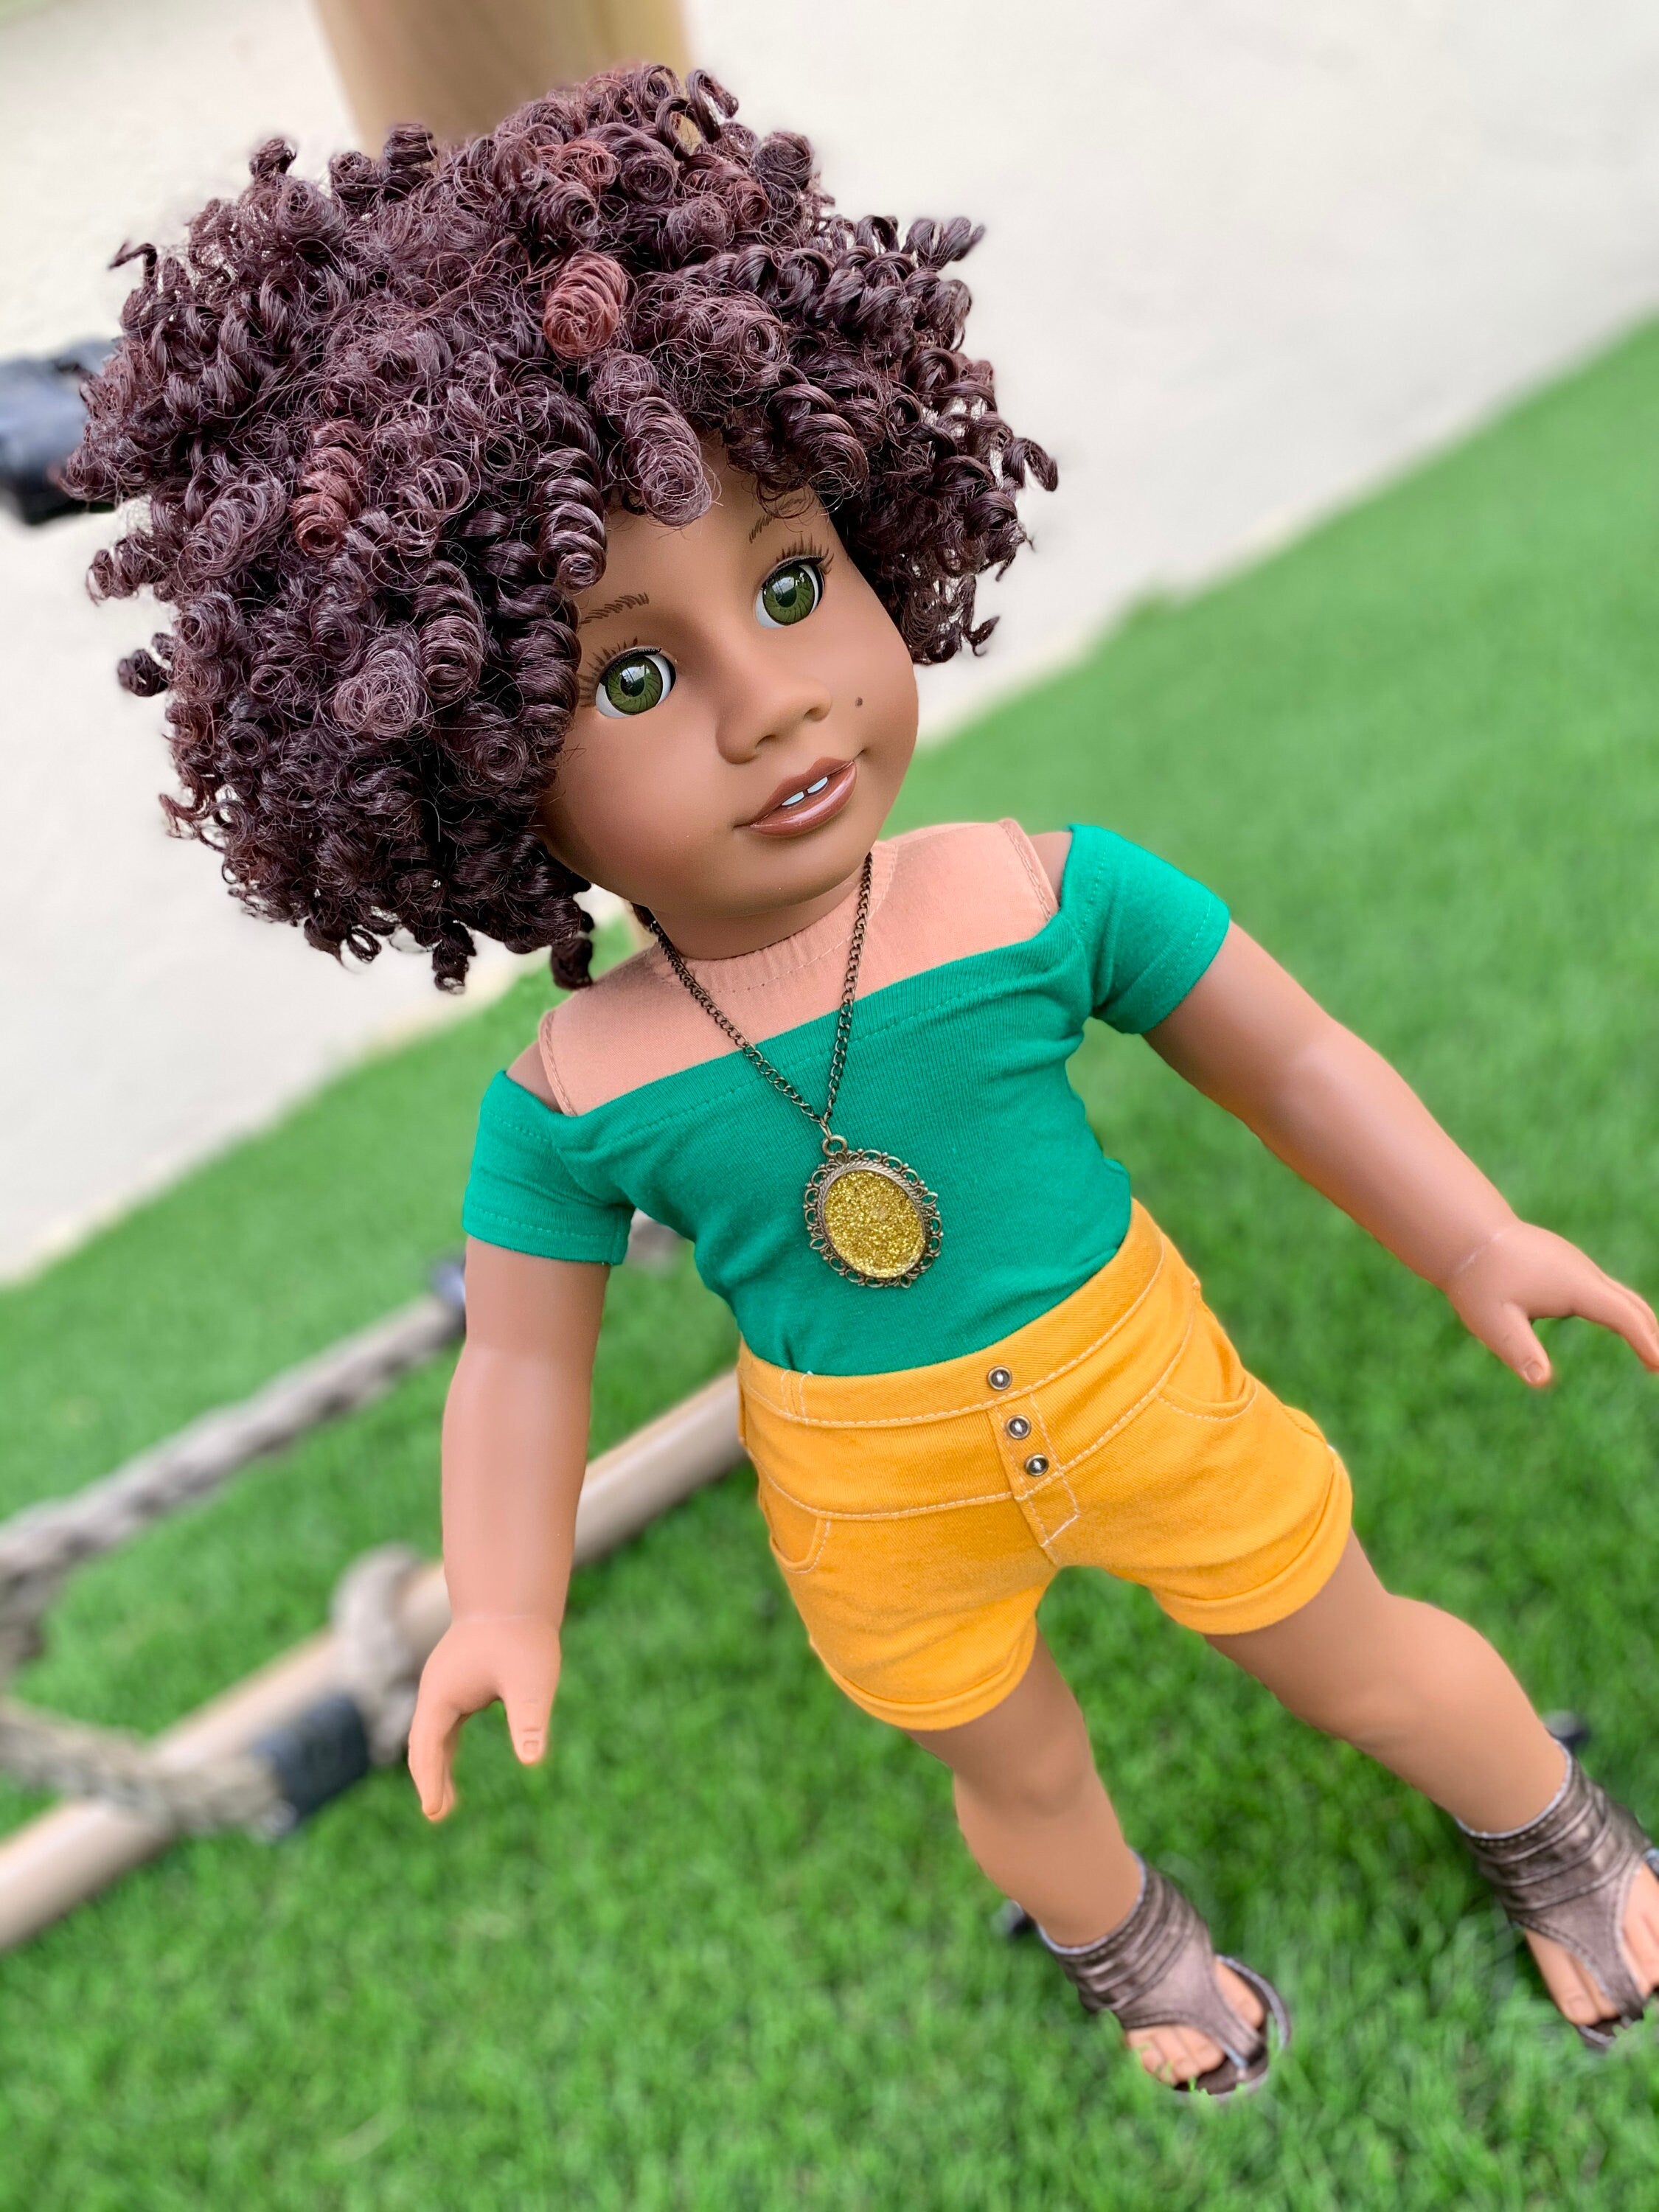 Custom doll wig for 18" American Girl Dolls Tangle Resistant - fits 10-11" head size of 18" dolls OG Blythe BJD Gotz AA!!